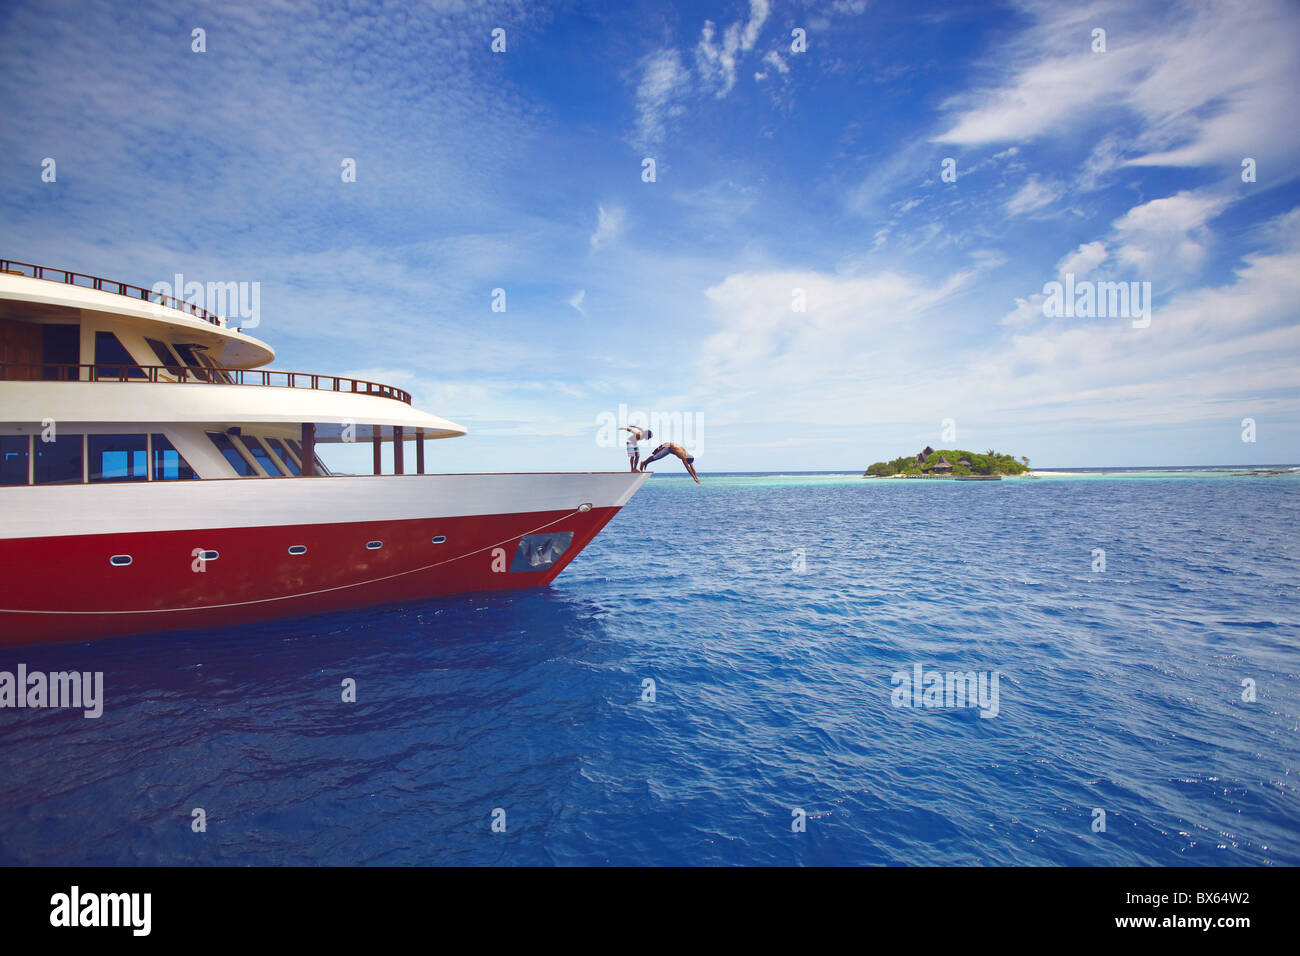 Junge Menschen springen vom Boot ins Meer, Malediven, Indischer Ozean, Asien Stockfoto